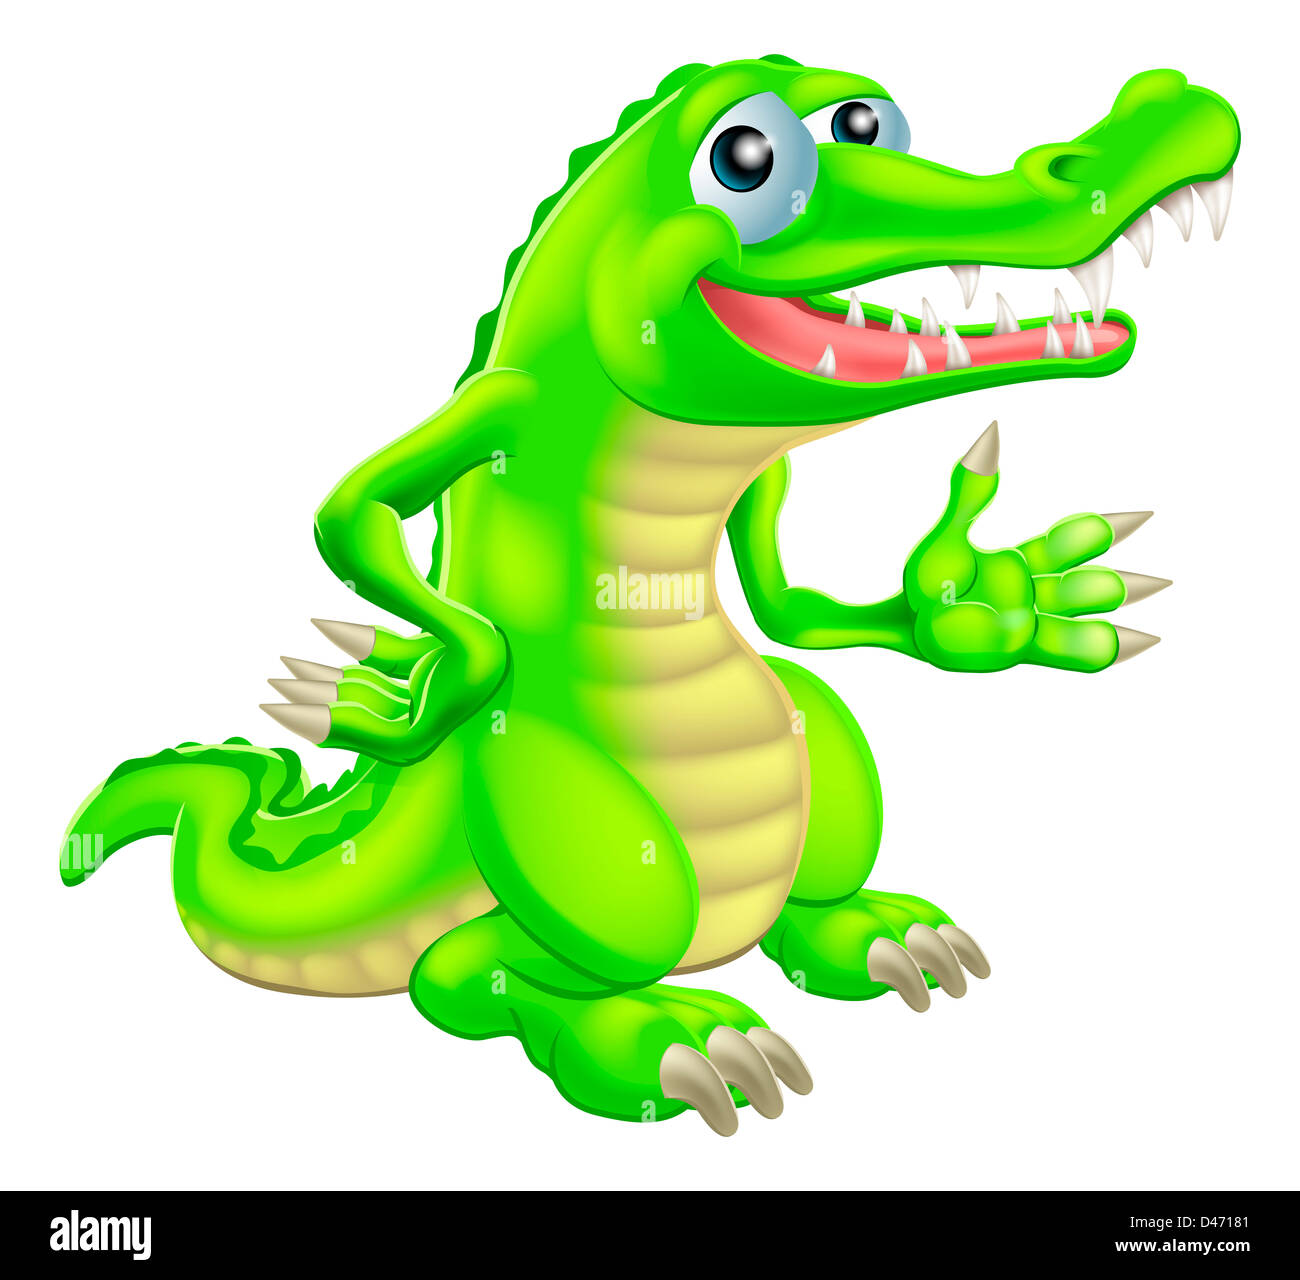 Illustration of a cartoon crocodile or alligator character or mascot Stock Photo